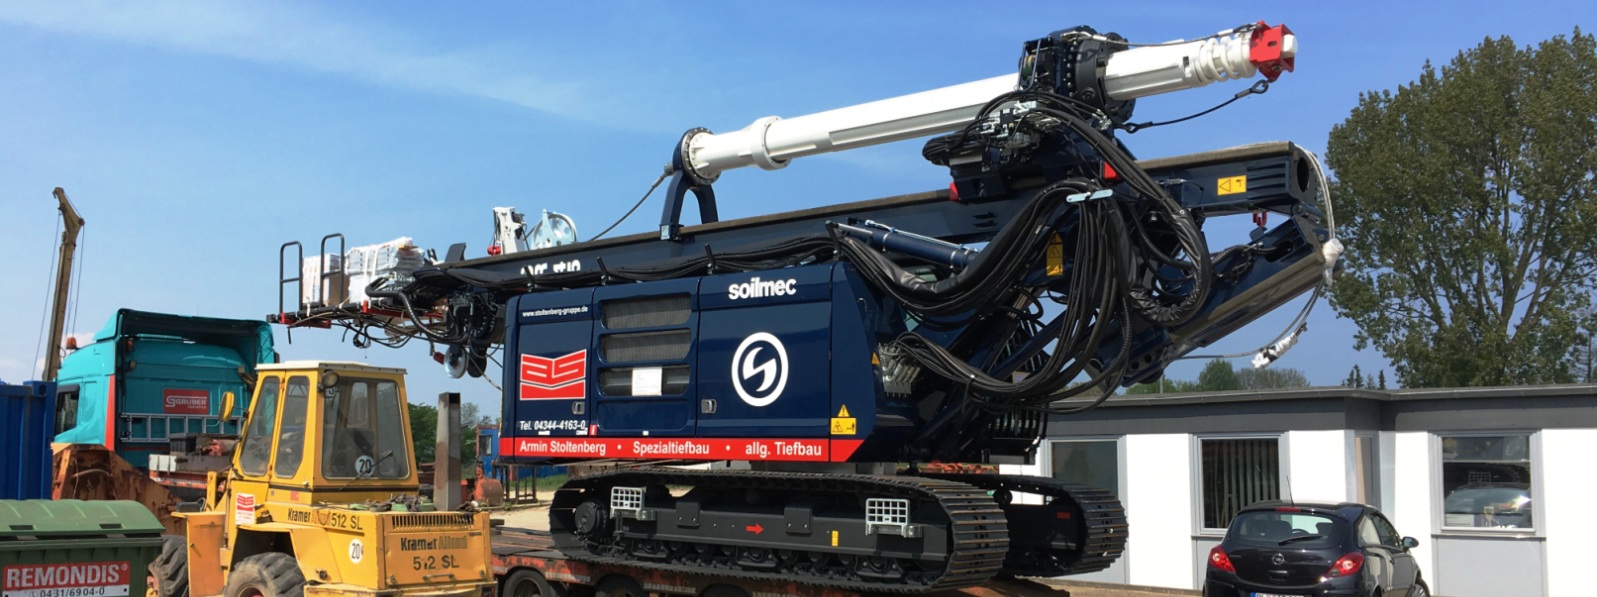 New Drilling Rig SR-45 in Germany | Soilmec Deutschland GmbH 